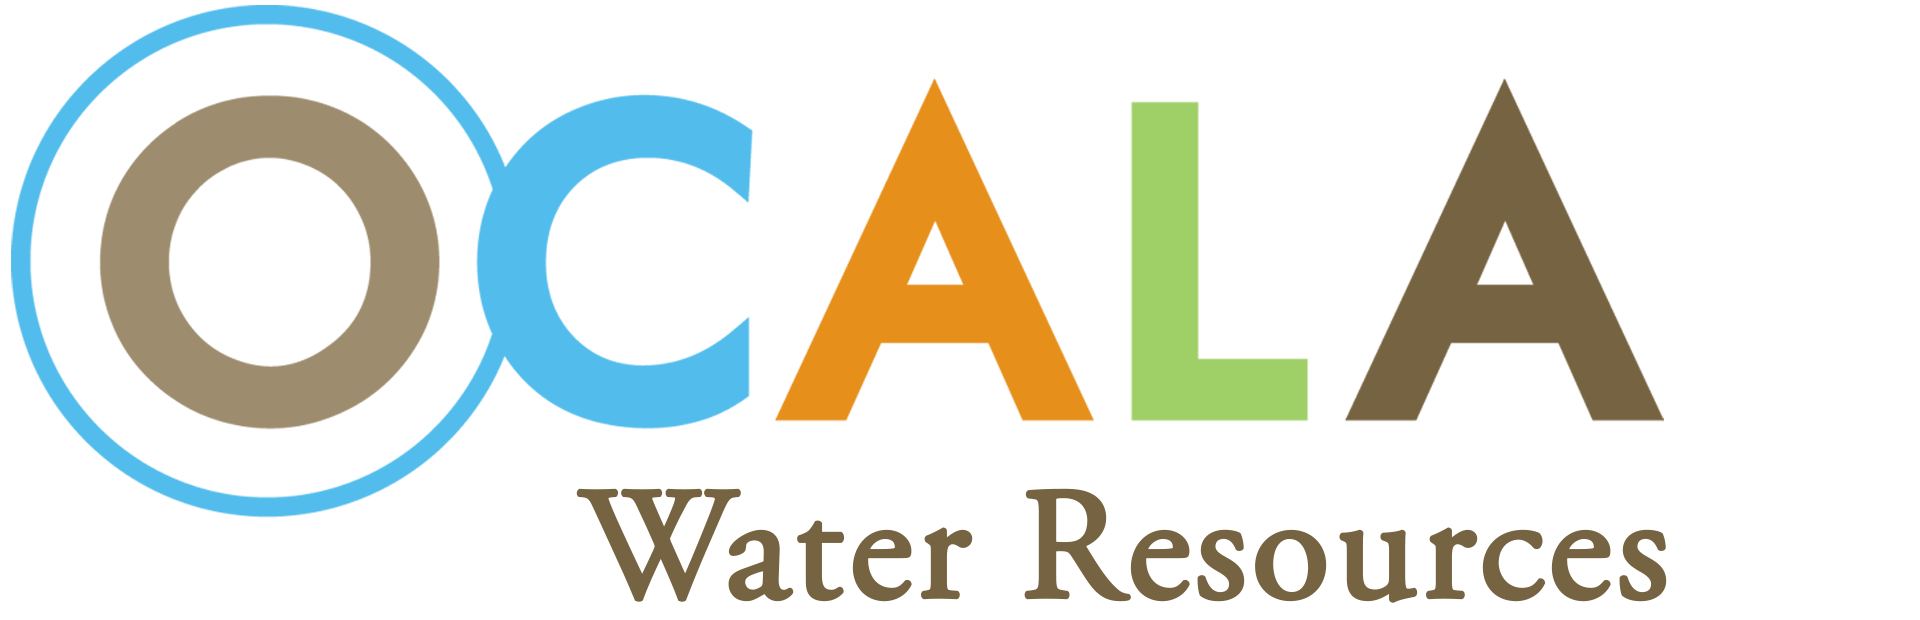 Water Resources Logo